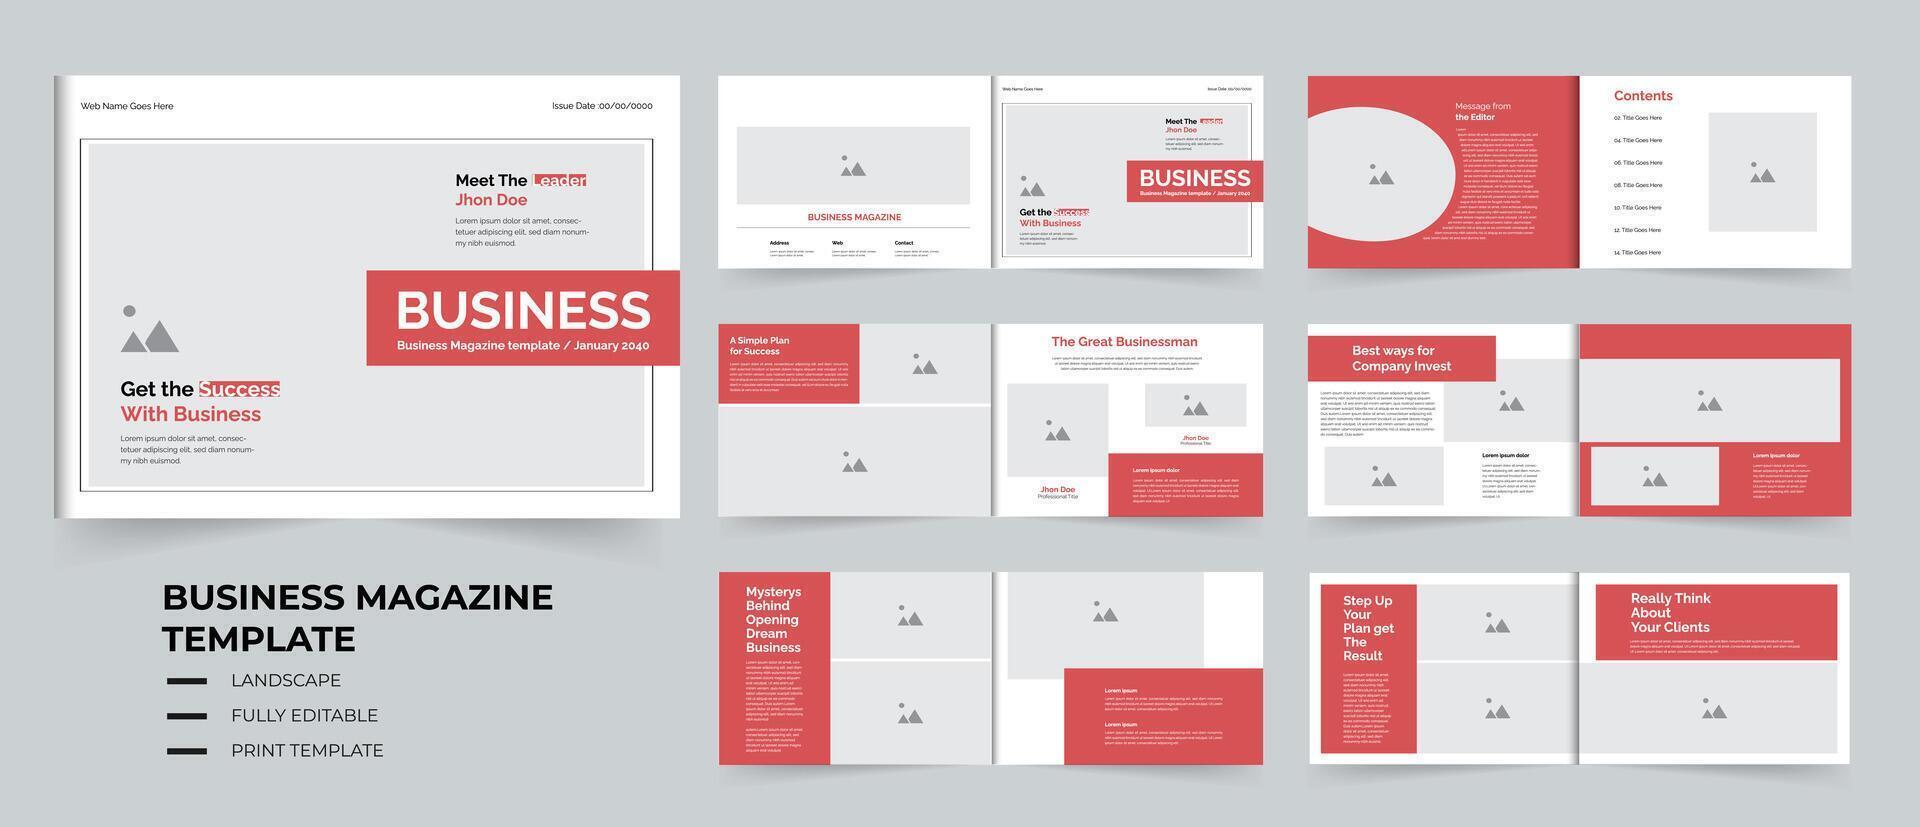 Business Magazine template design A4 Landscape 12 Pages layout vector